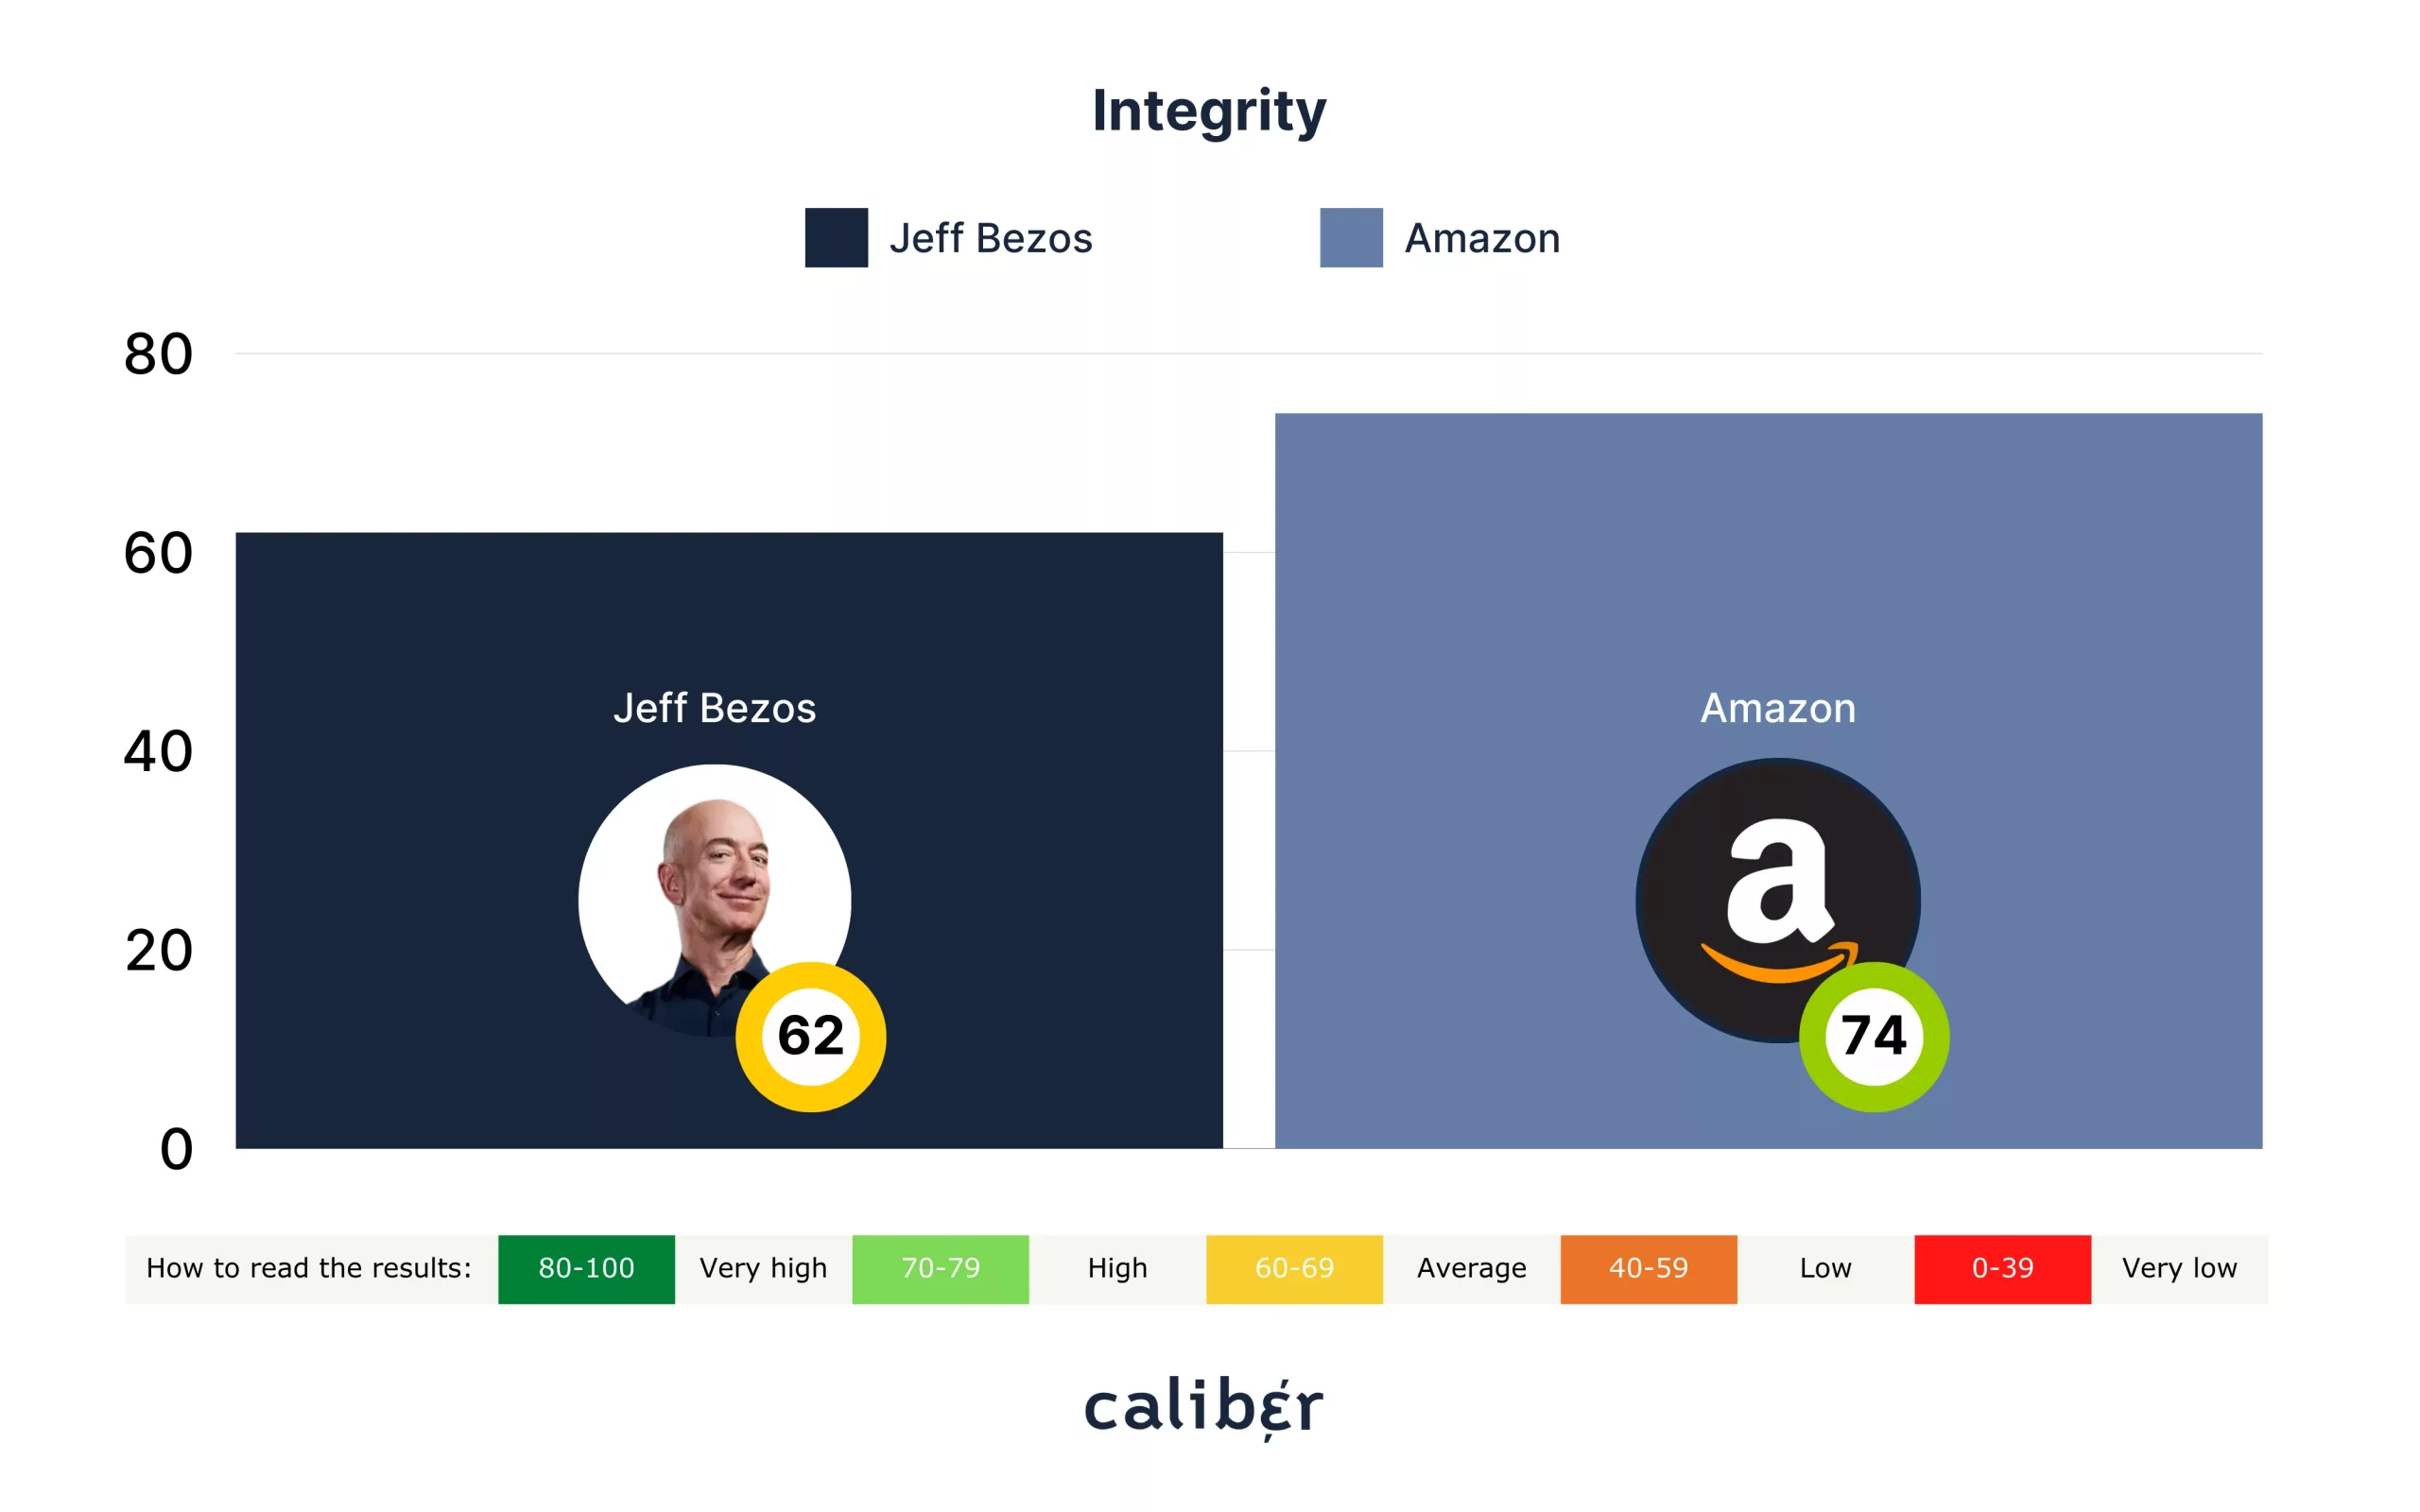 Jeff Bezos Integrity Score